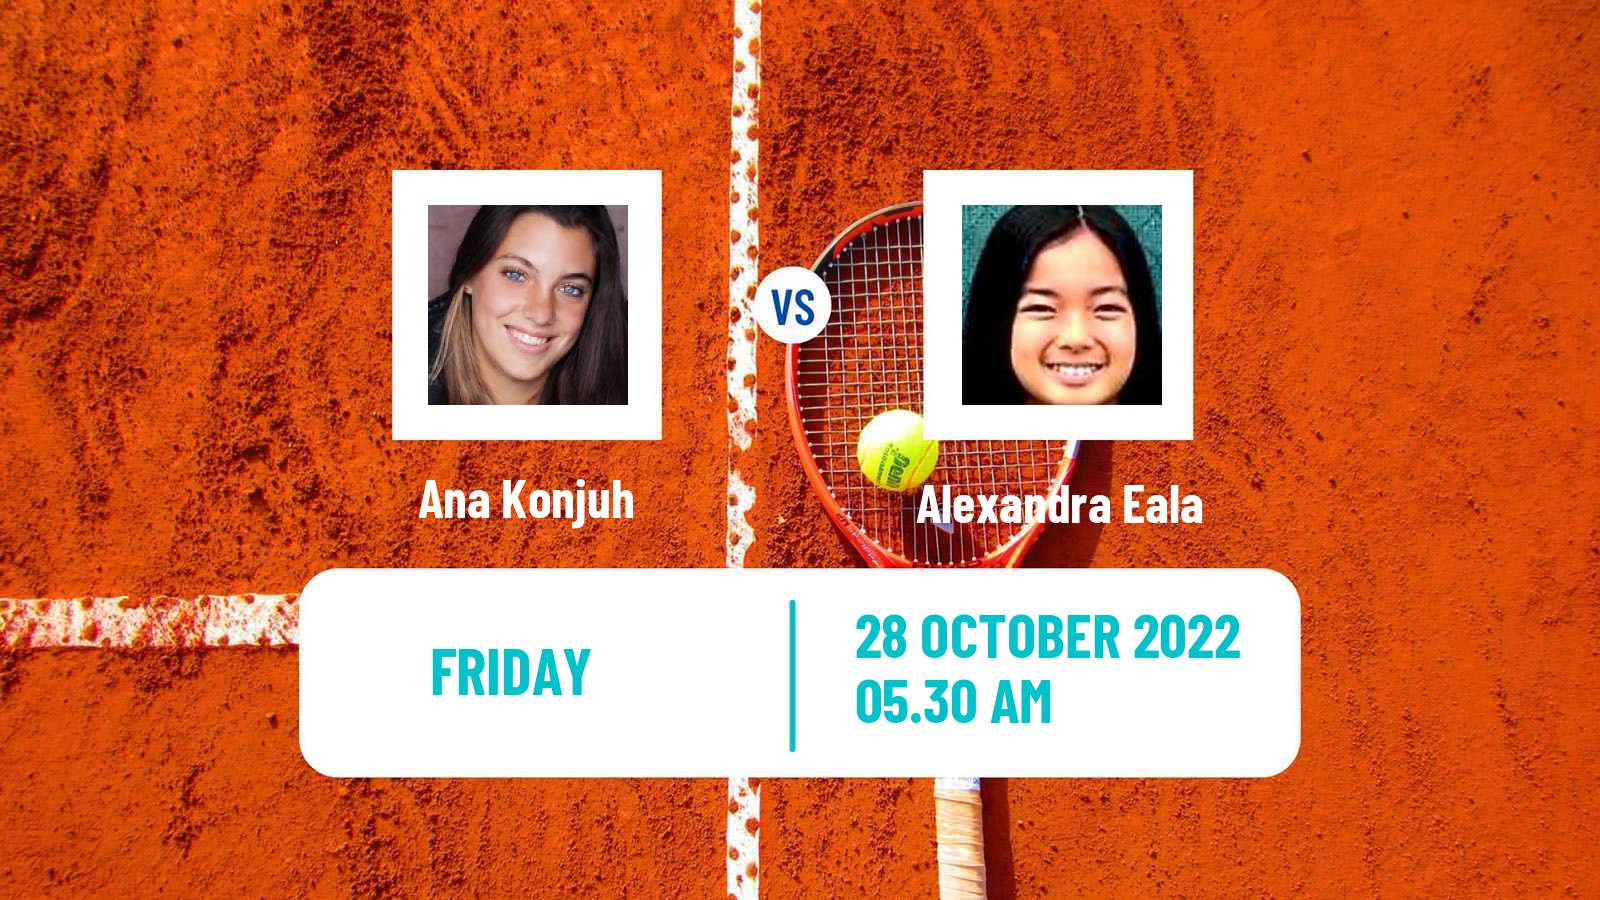 Tennis ITF Tournaments Ana Konjuh - Alexandra Eala